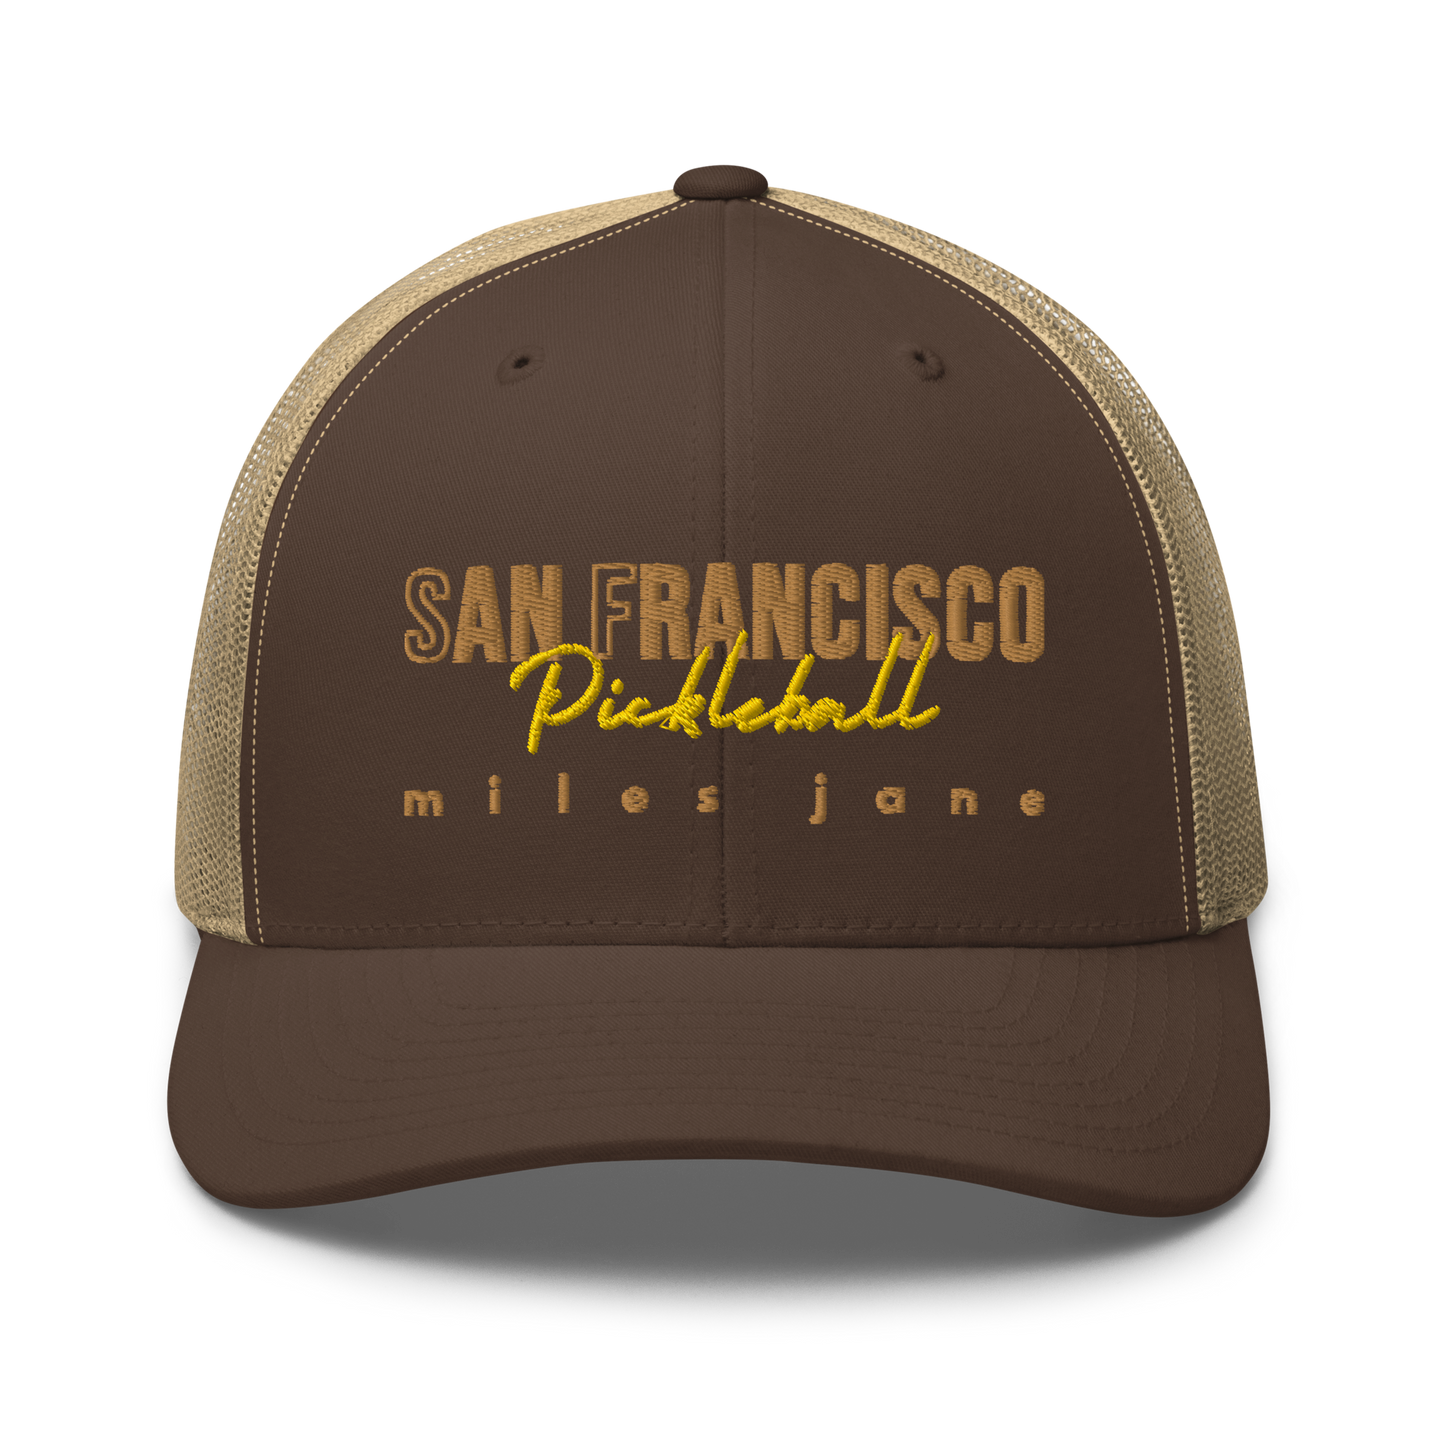 NorCal San Francisco - Retro Trucker Hat (Yupoong) MJ299